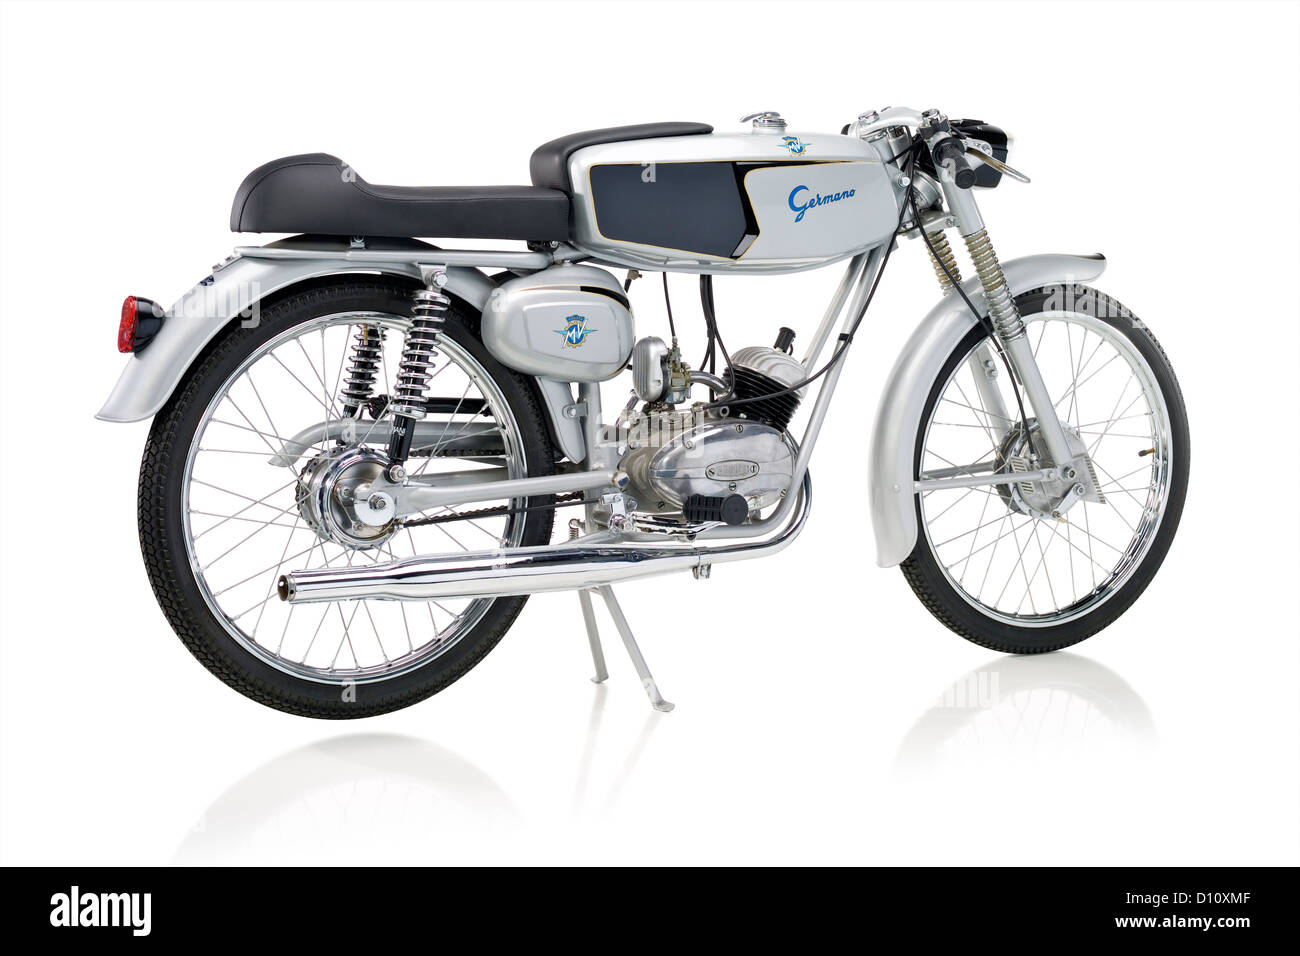 1966 MV Agusta Germano Sport motorcycle Stock Photo - Alamy